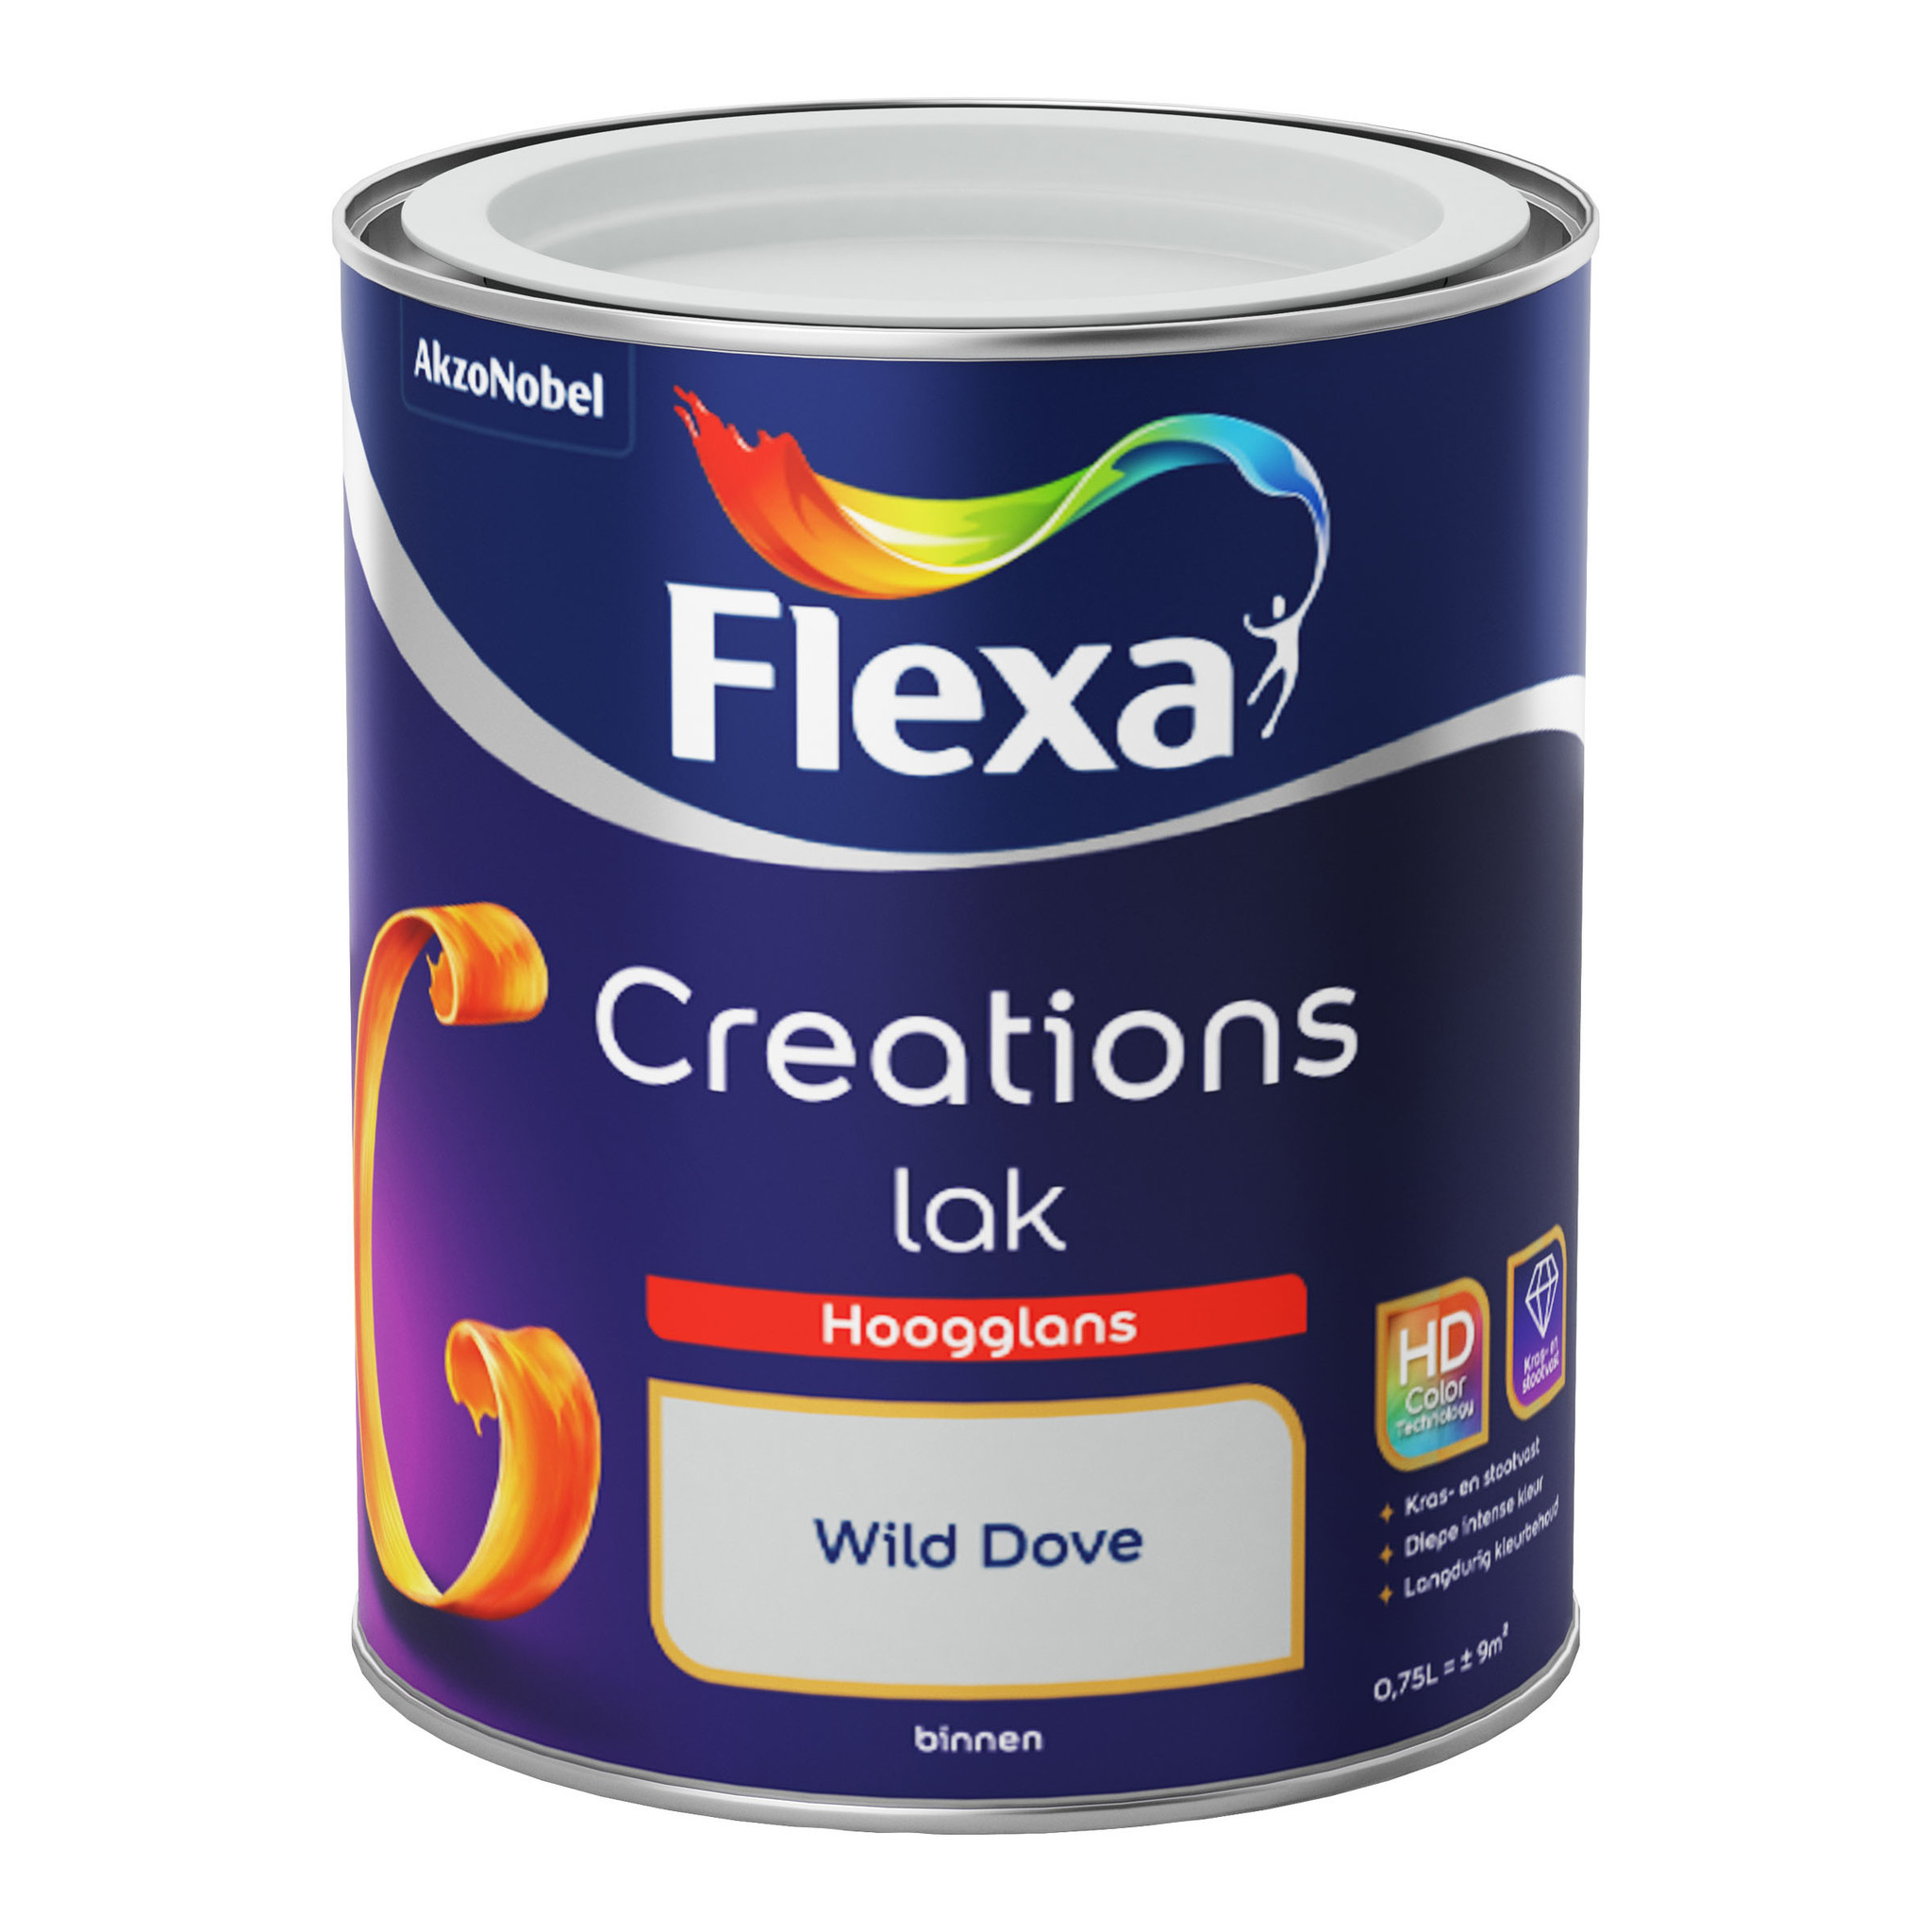 Flexa Creations Lak Hoogglans - Wild Dove